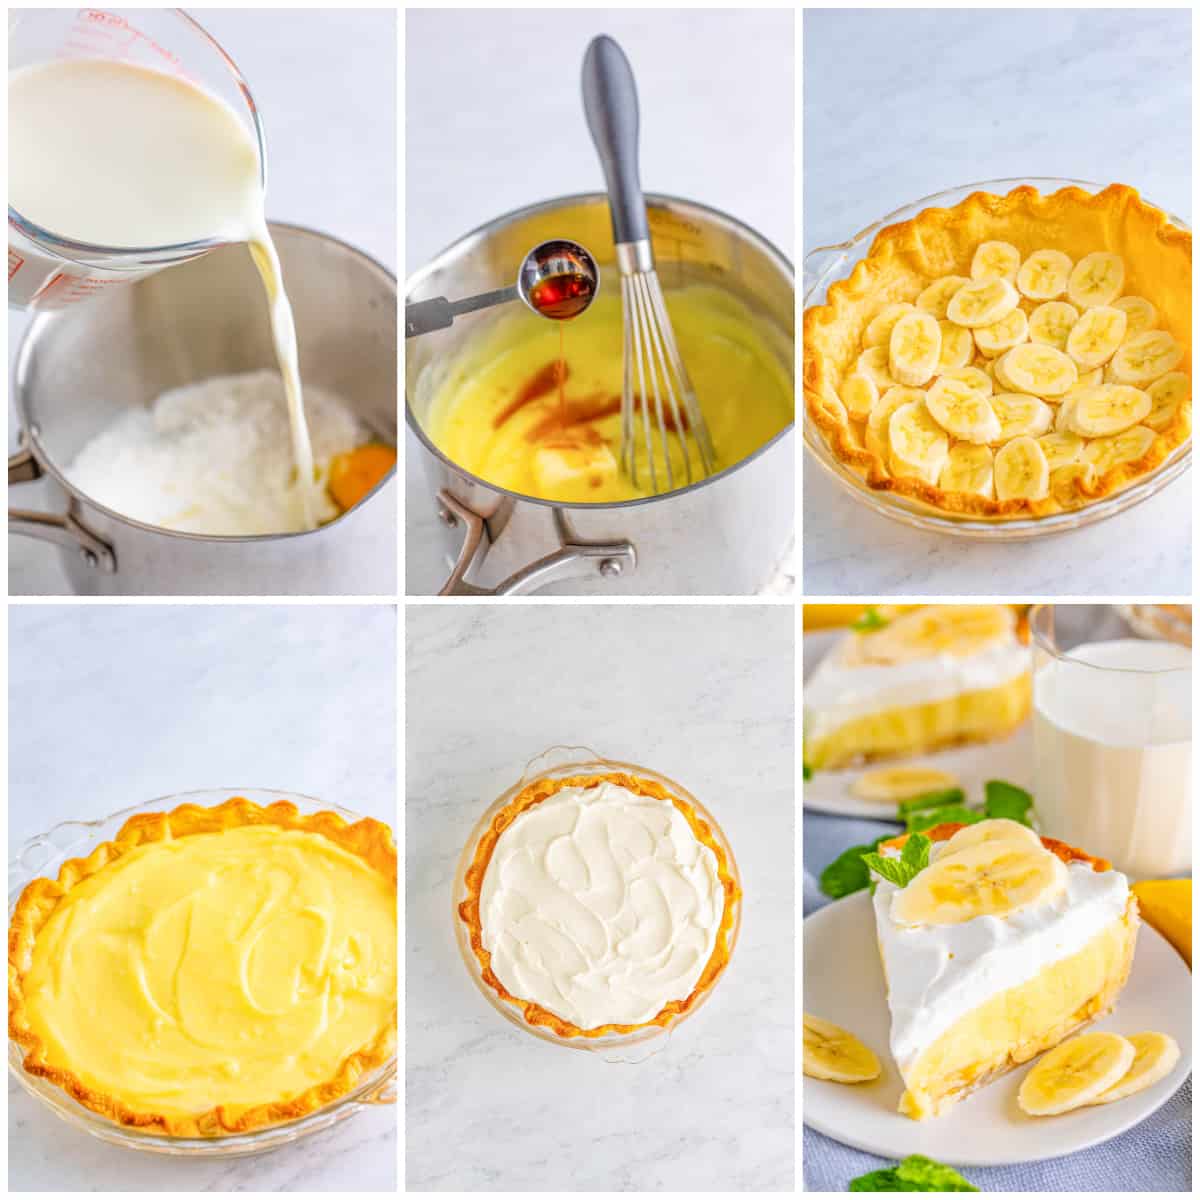 Step by step photos on how to make Banana Cream Pie.